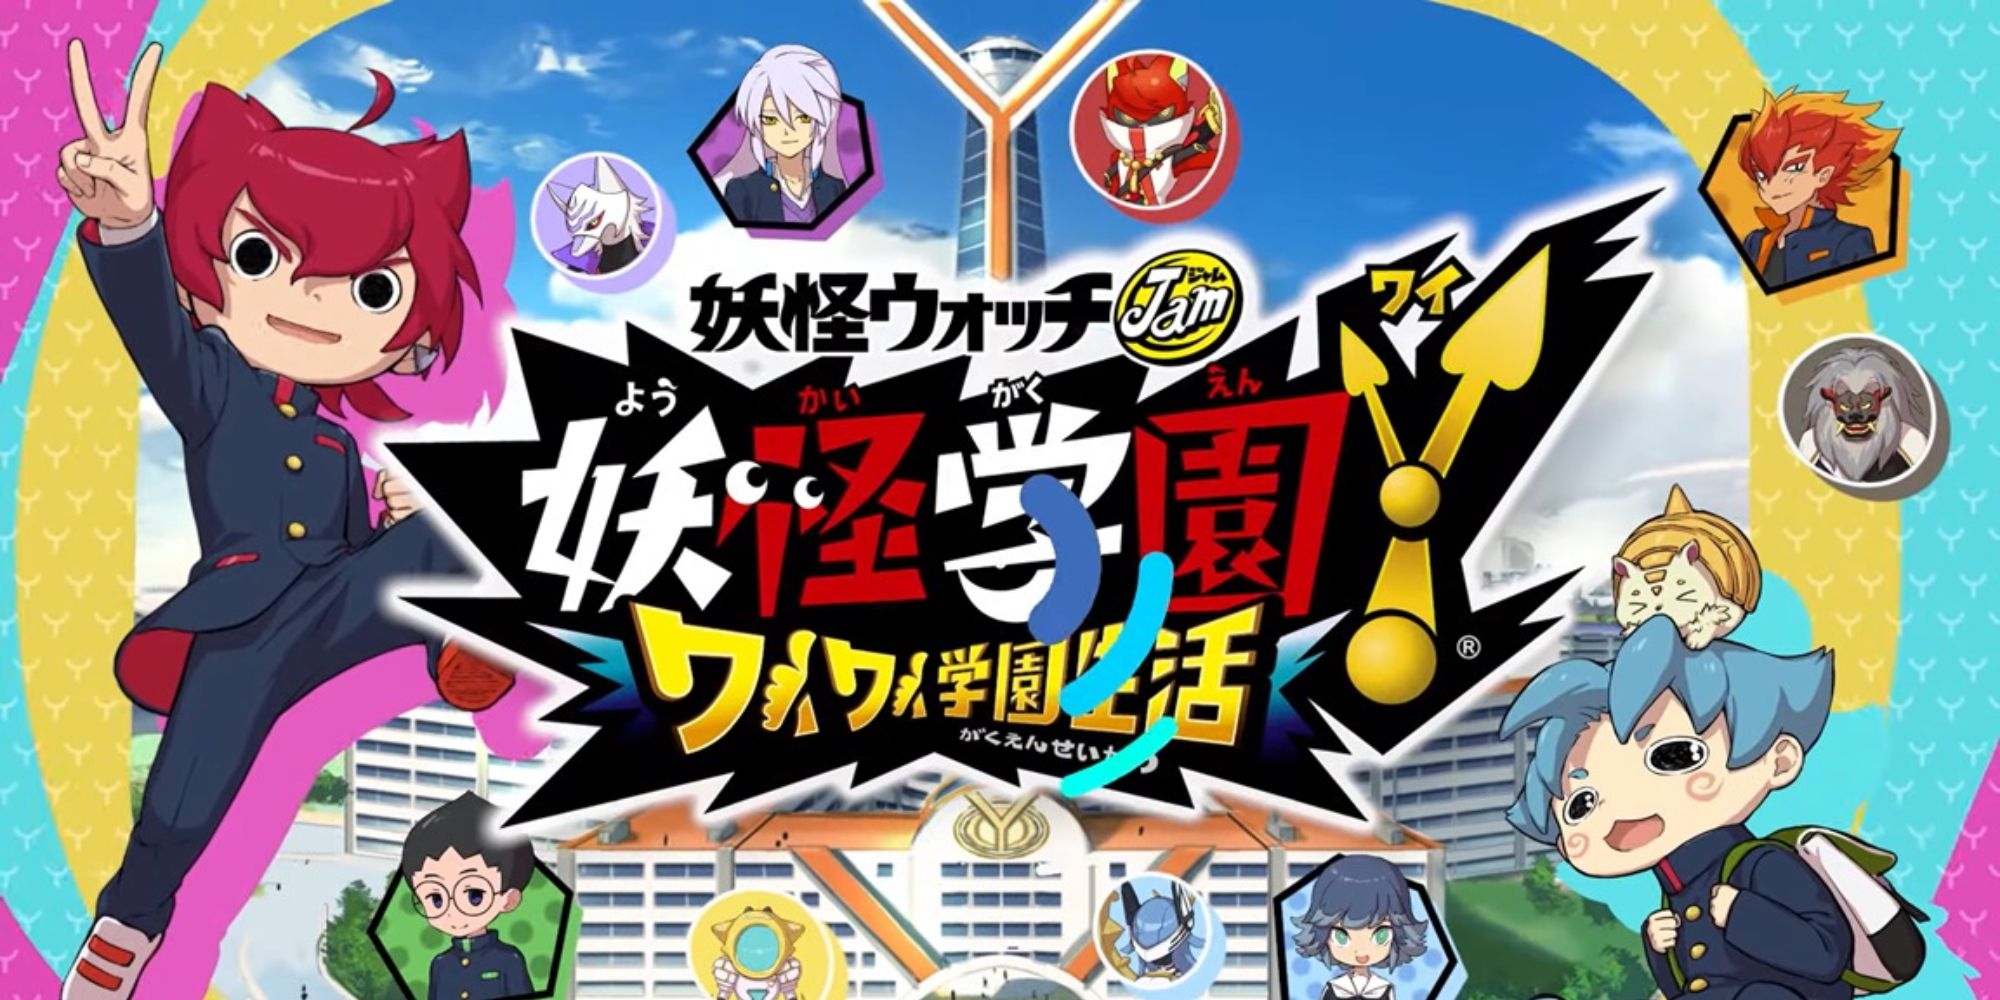 promotional art for the game Yo-kai Watch Jam: Yo-kai Academy Y – Waiwai Gakuen Seikatsu featuring a selection of its characters including its protagonists